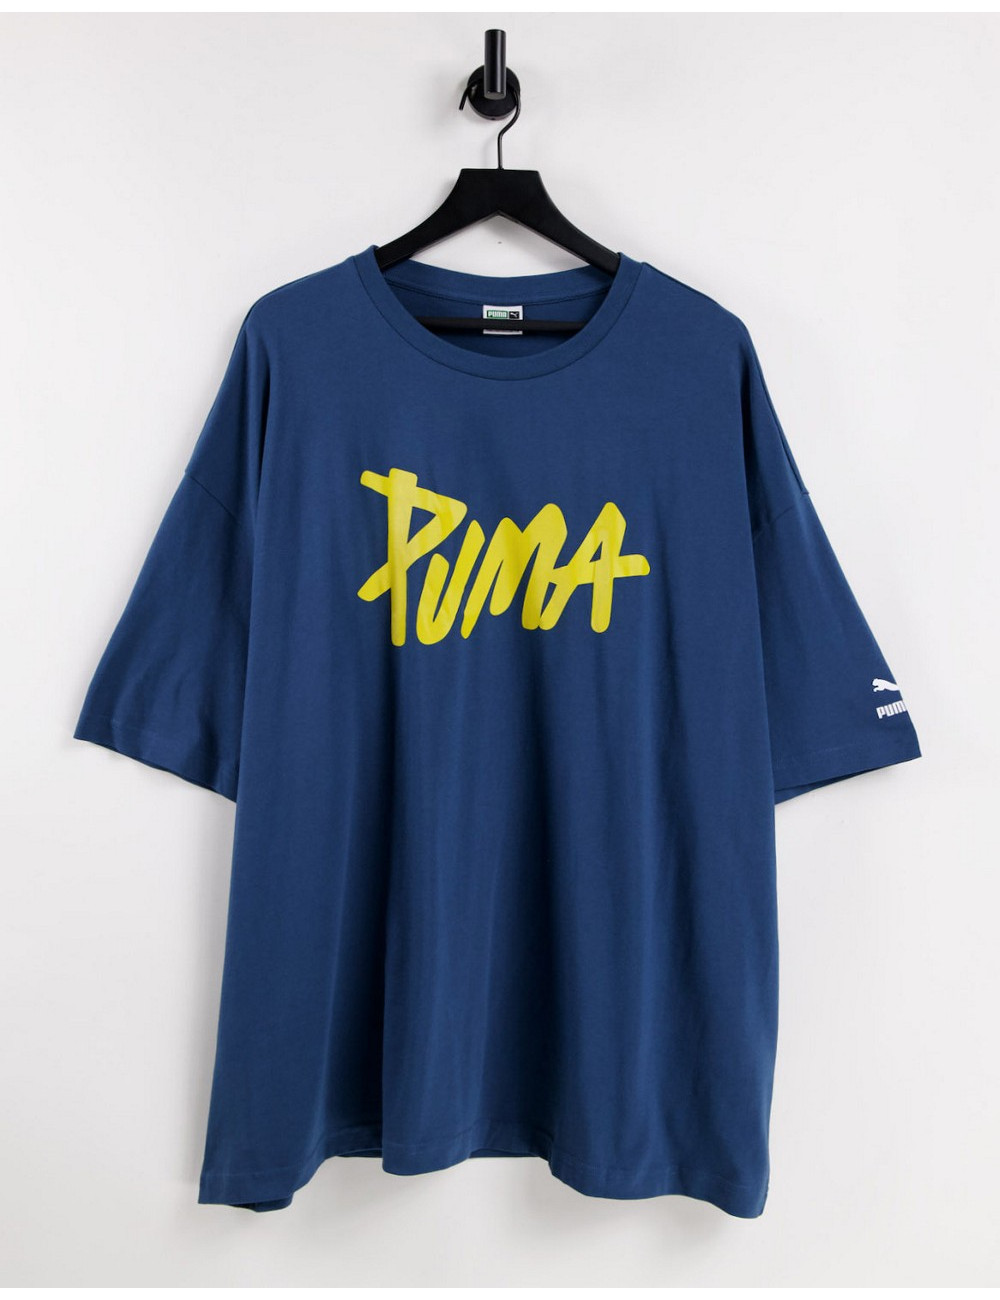 Puma skate boxy t-shirt in...